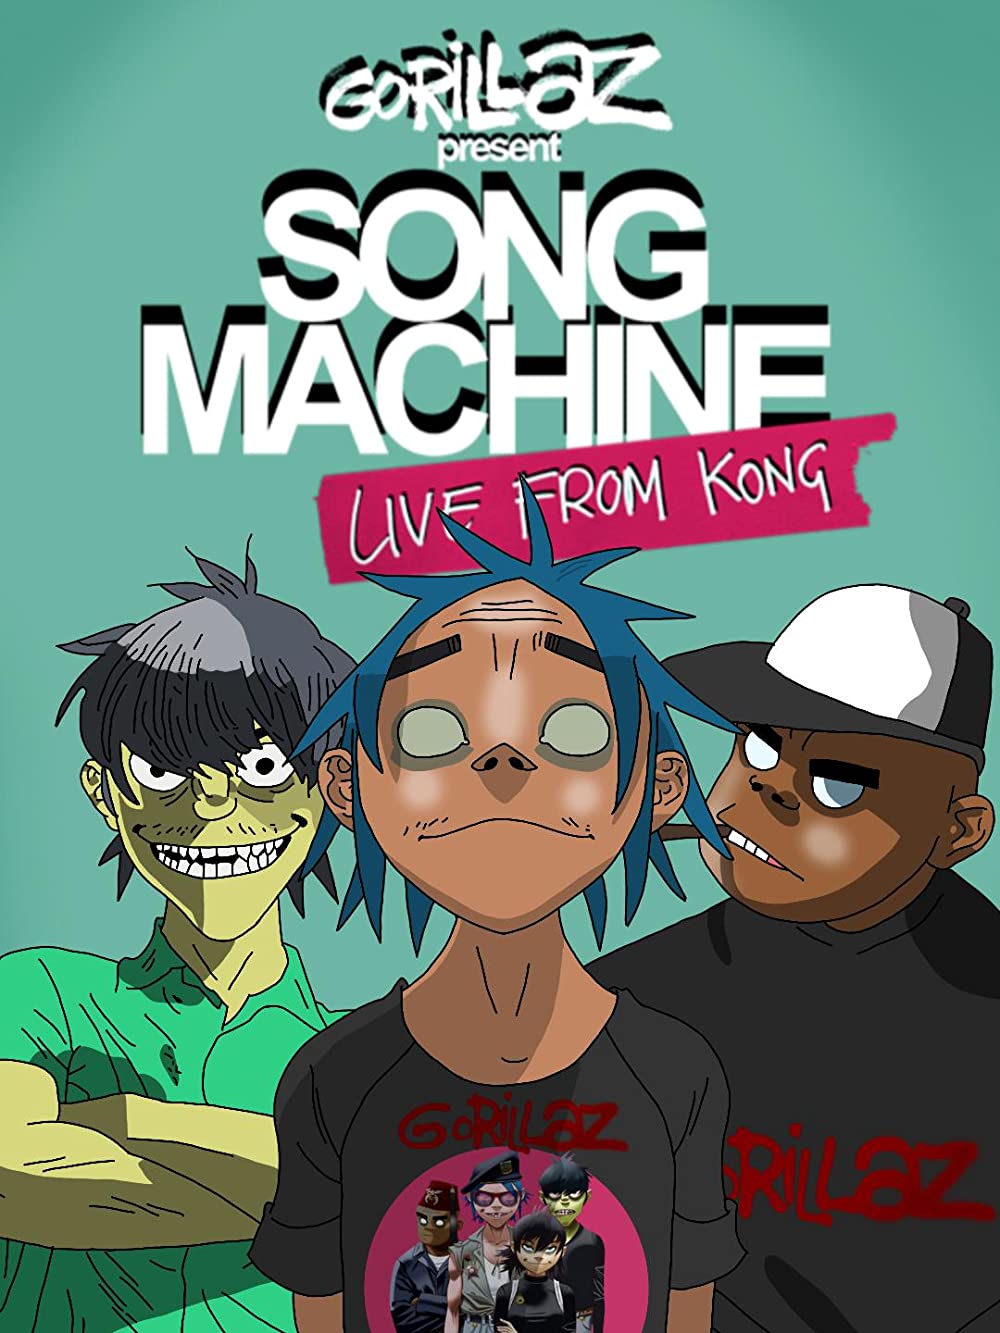 Filmbeschreibung zu Gorillaz: Song Machine Live from Kong (OV)